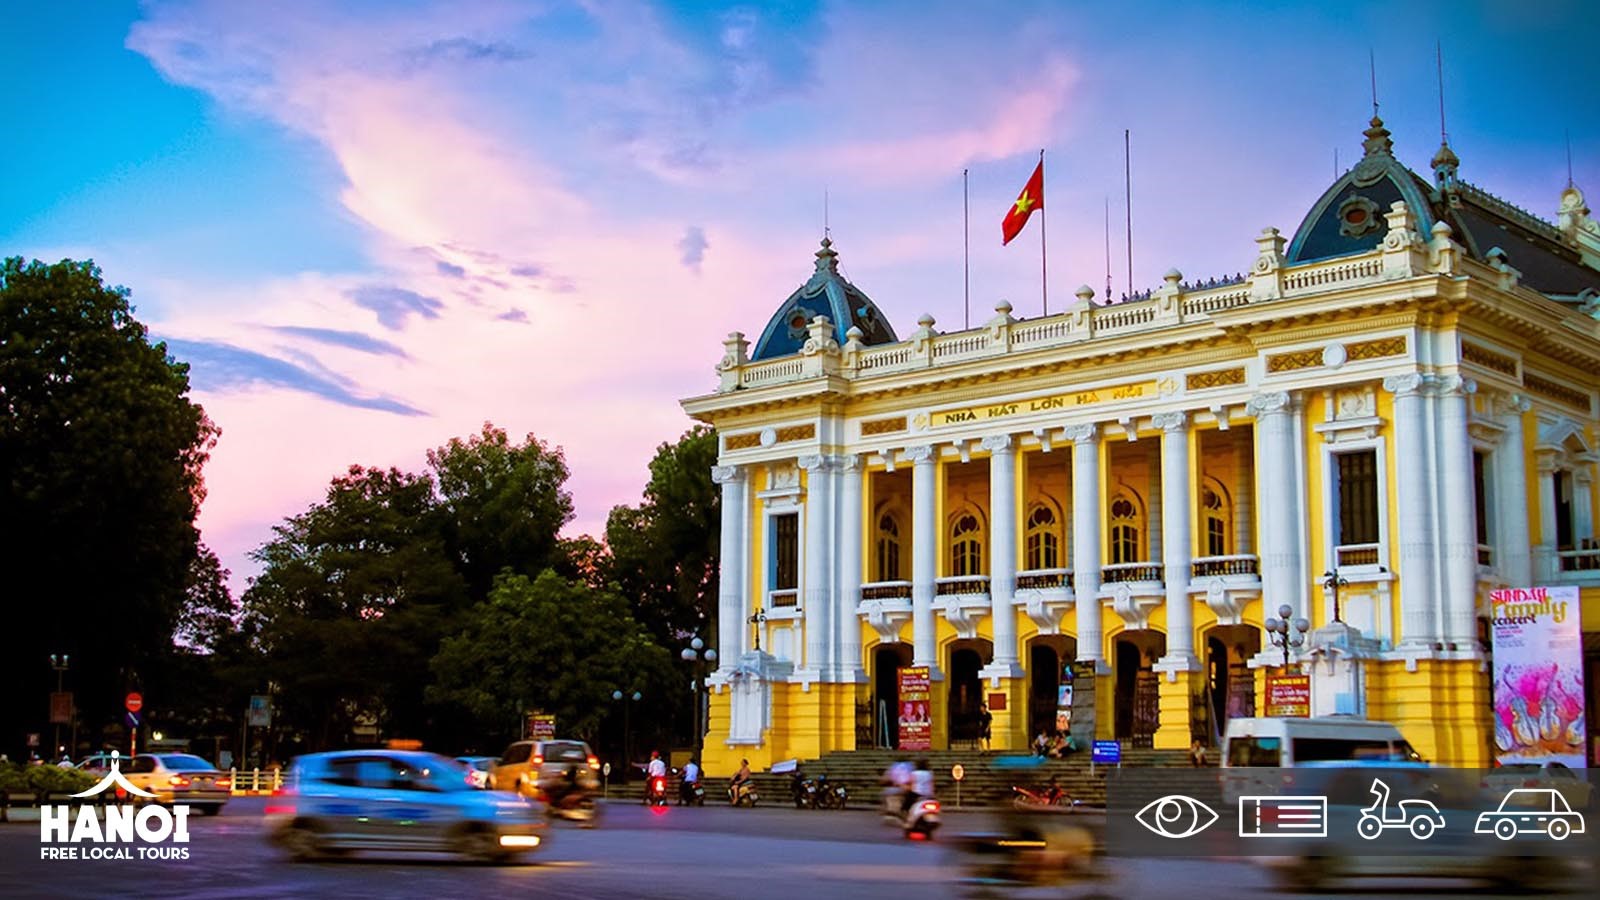  Hanoi Opera House 